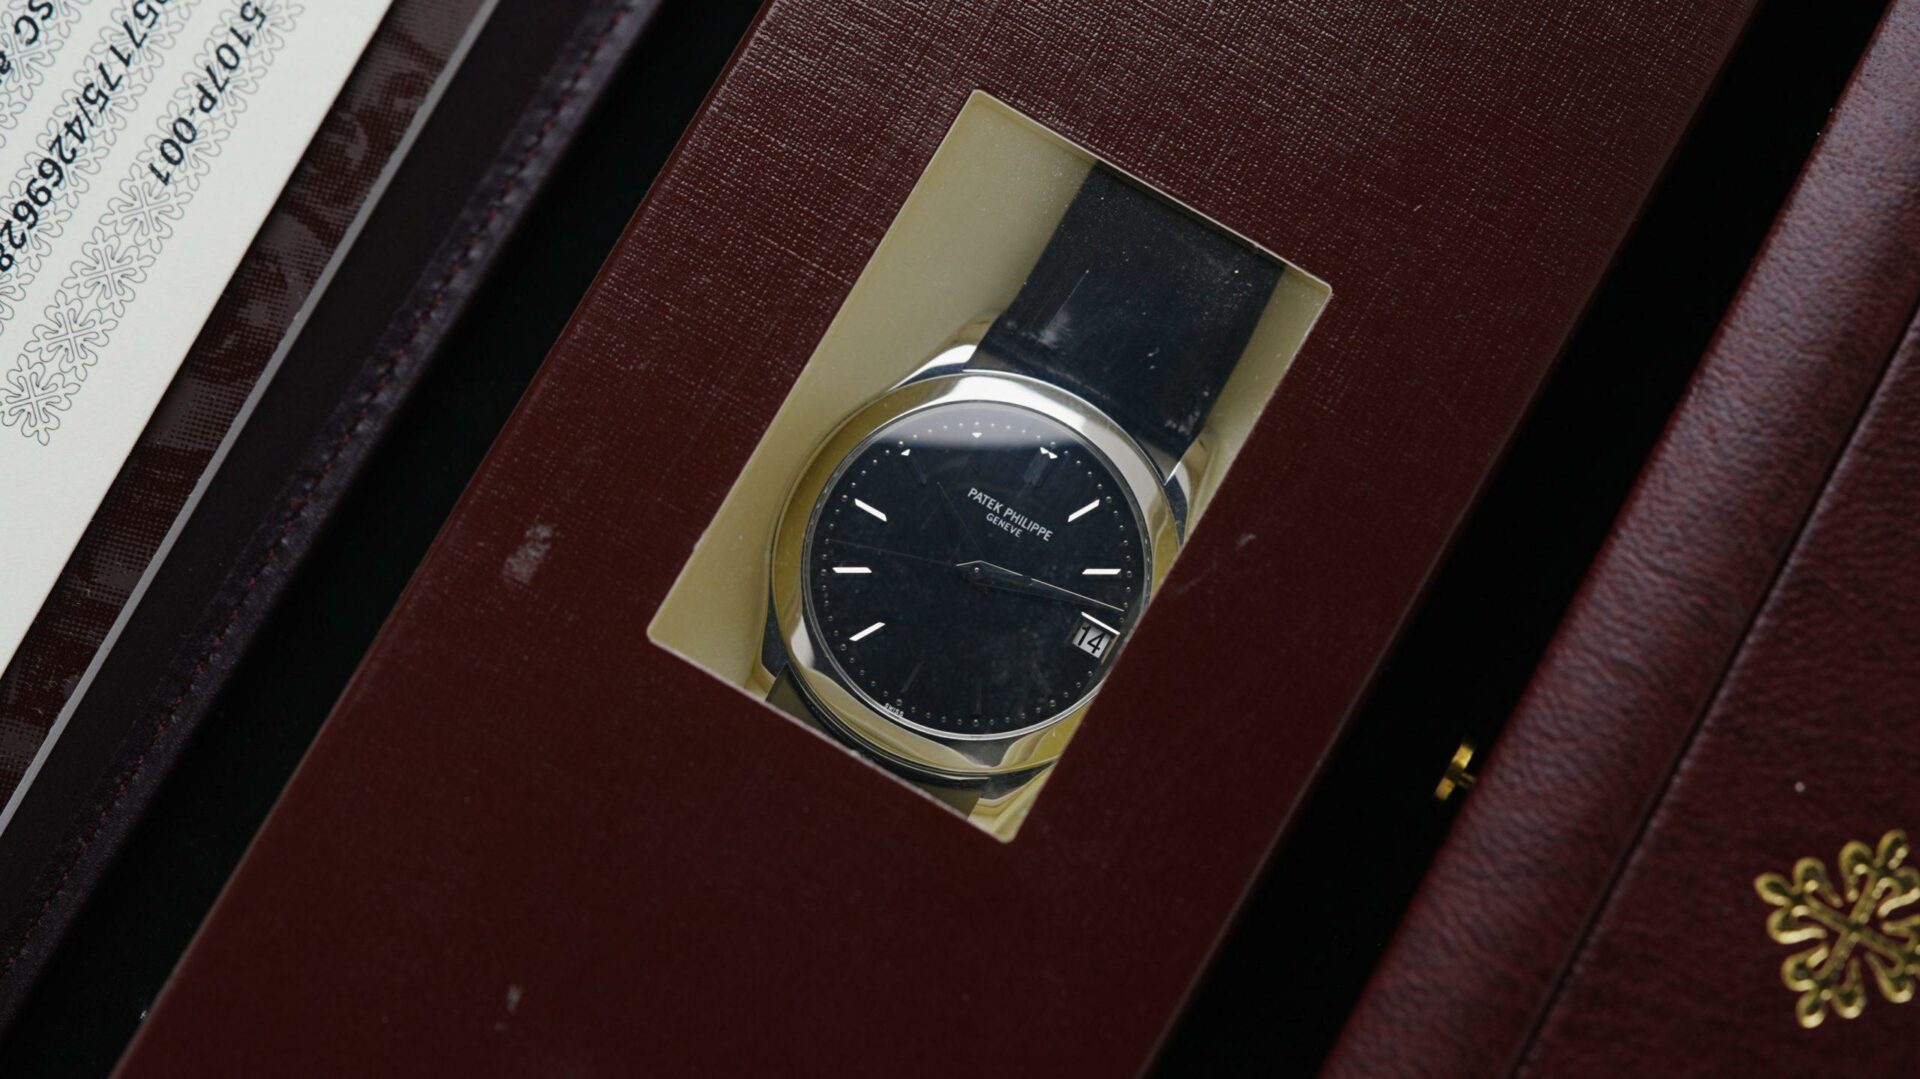 Patek Philippe Calatrava Darth Platinum watch inside watch box.